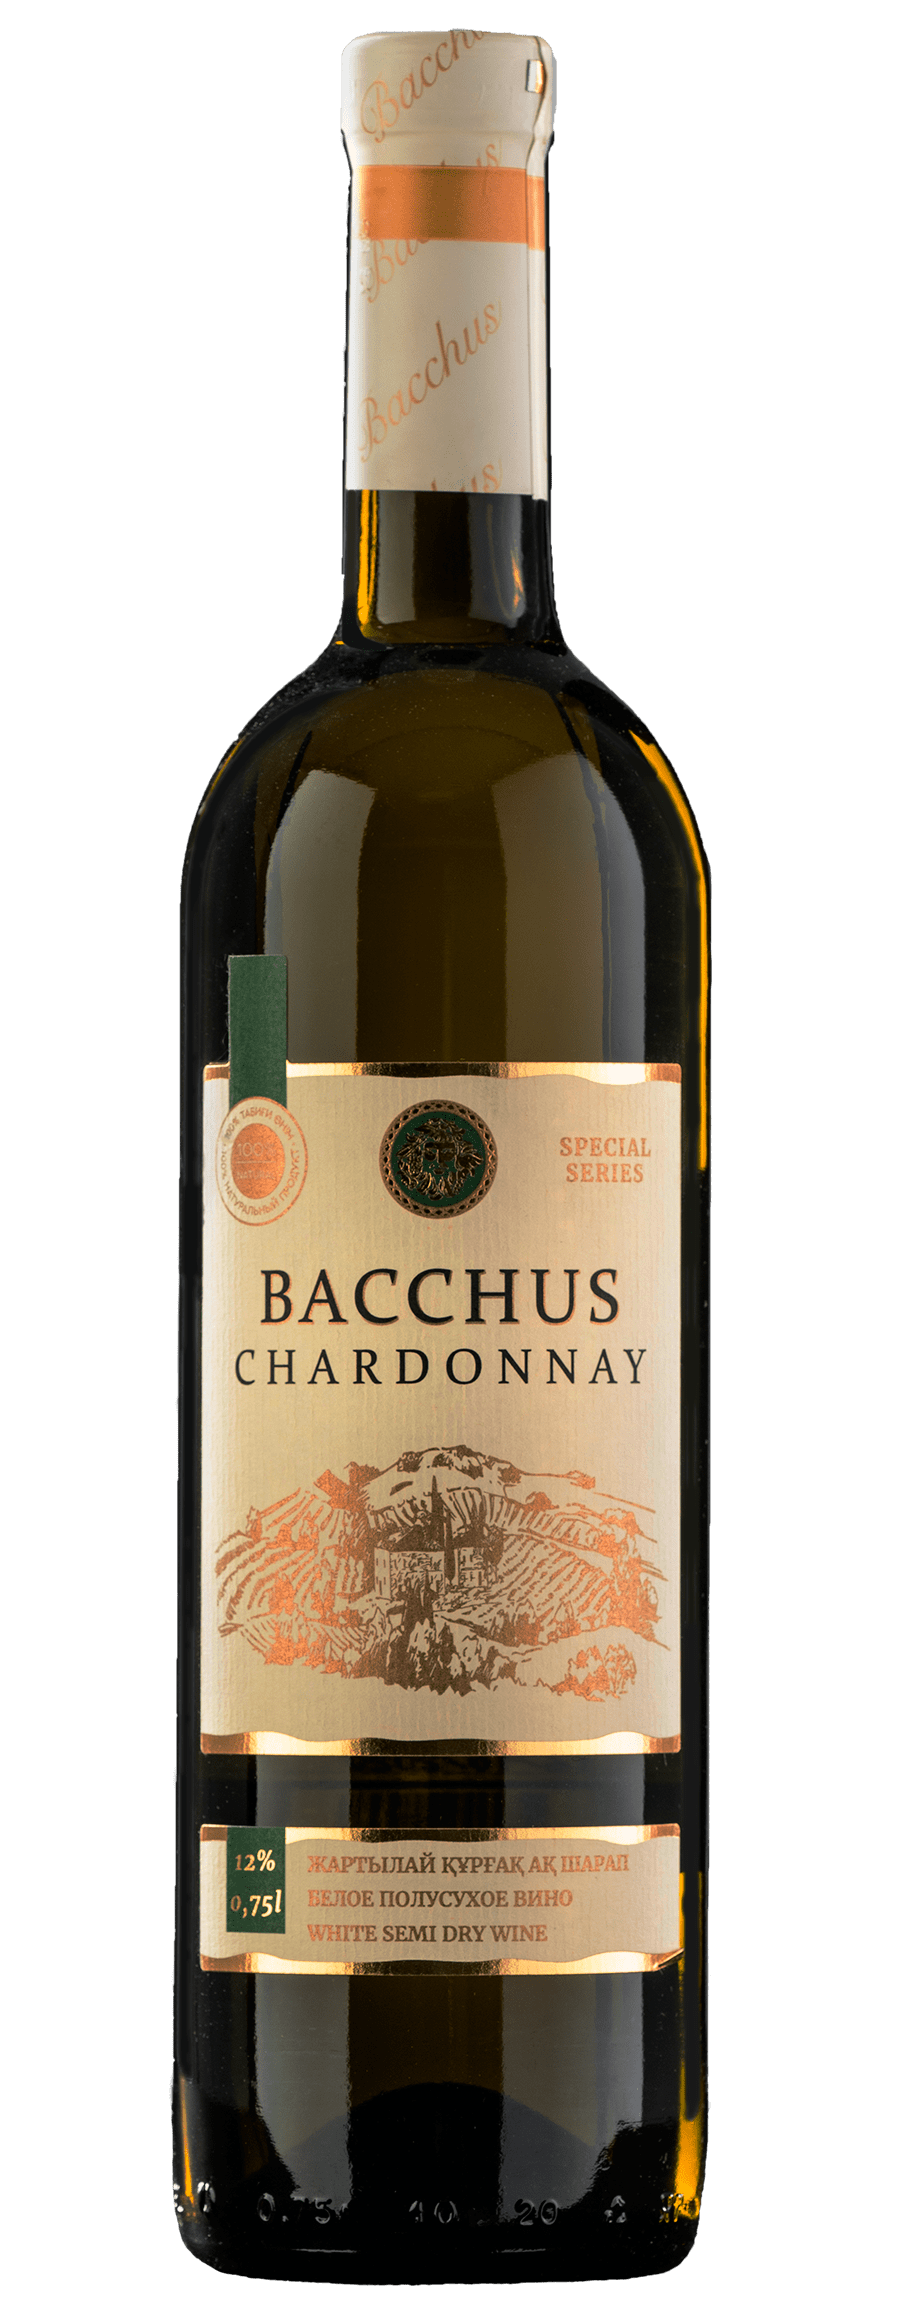 Bacchus Chardonnay 